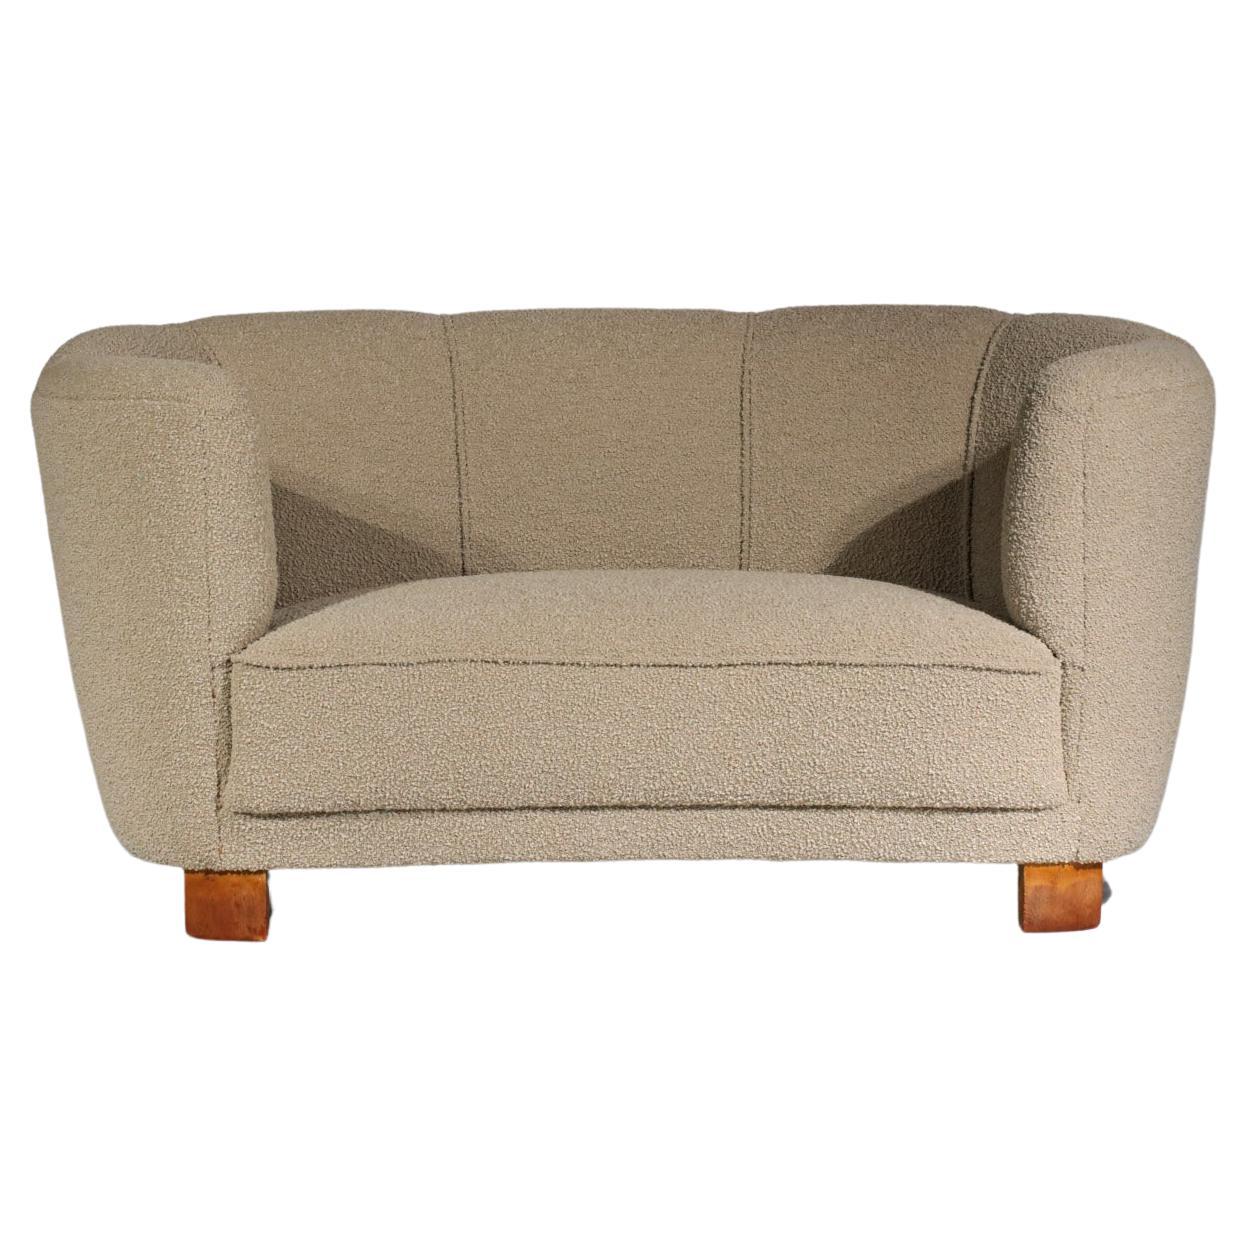 Mid-Century Modern Rare Danish Sofa from the 40's Curved Beige Fabric Scandinavian Armchair